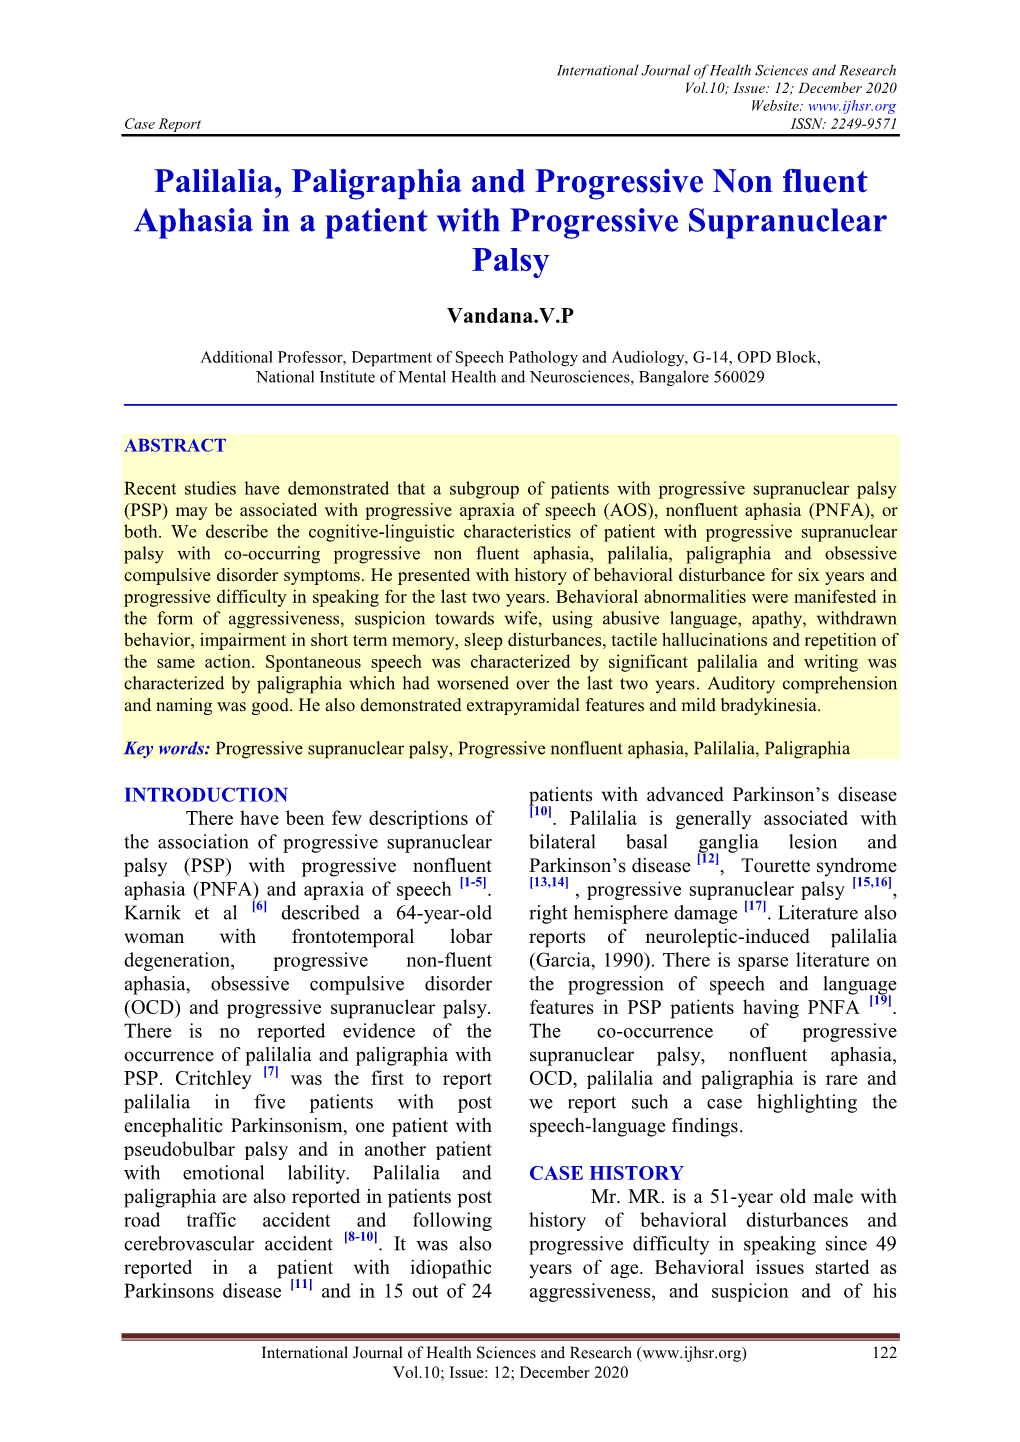 Palilalia, Paligraphia and Progressive Non Fluent Aphasia in a Patient with Progressive Supranuclear Palsy